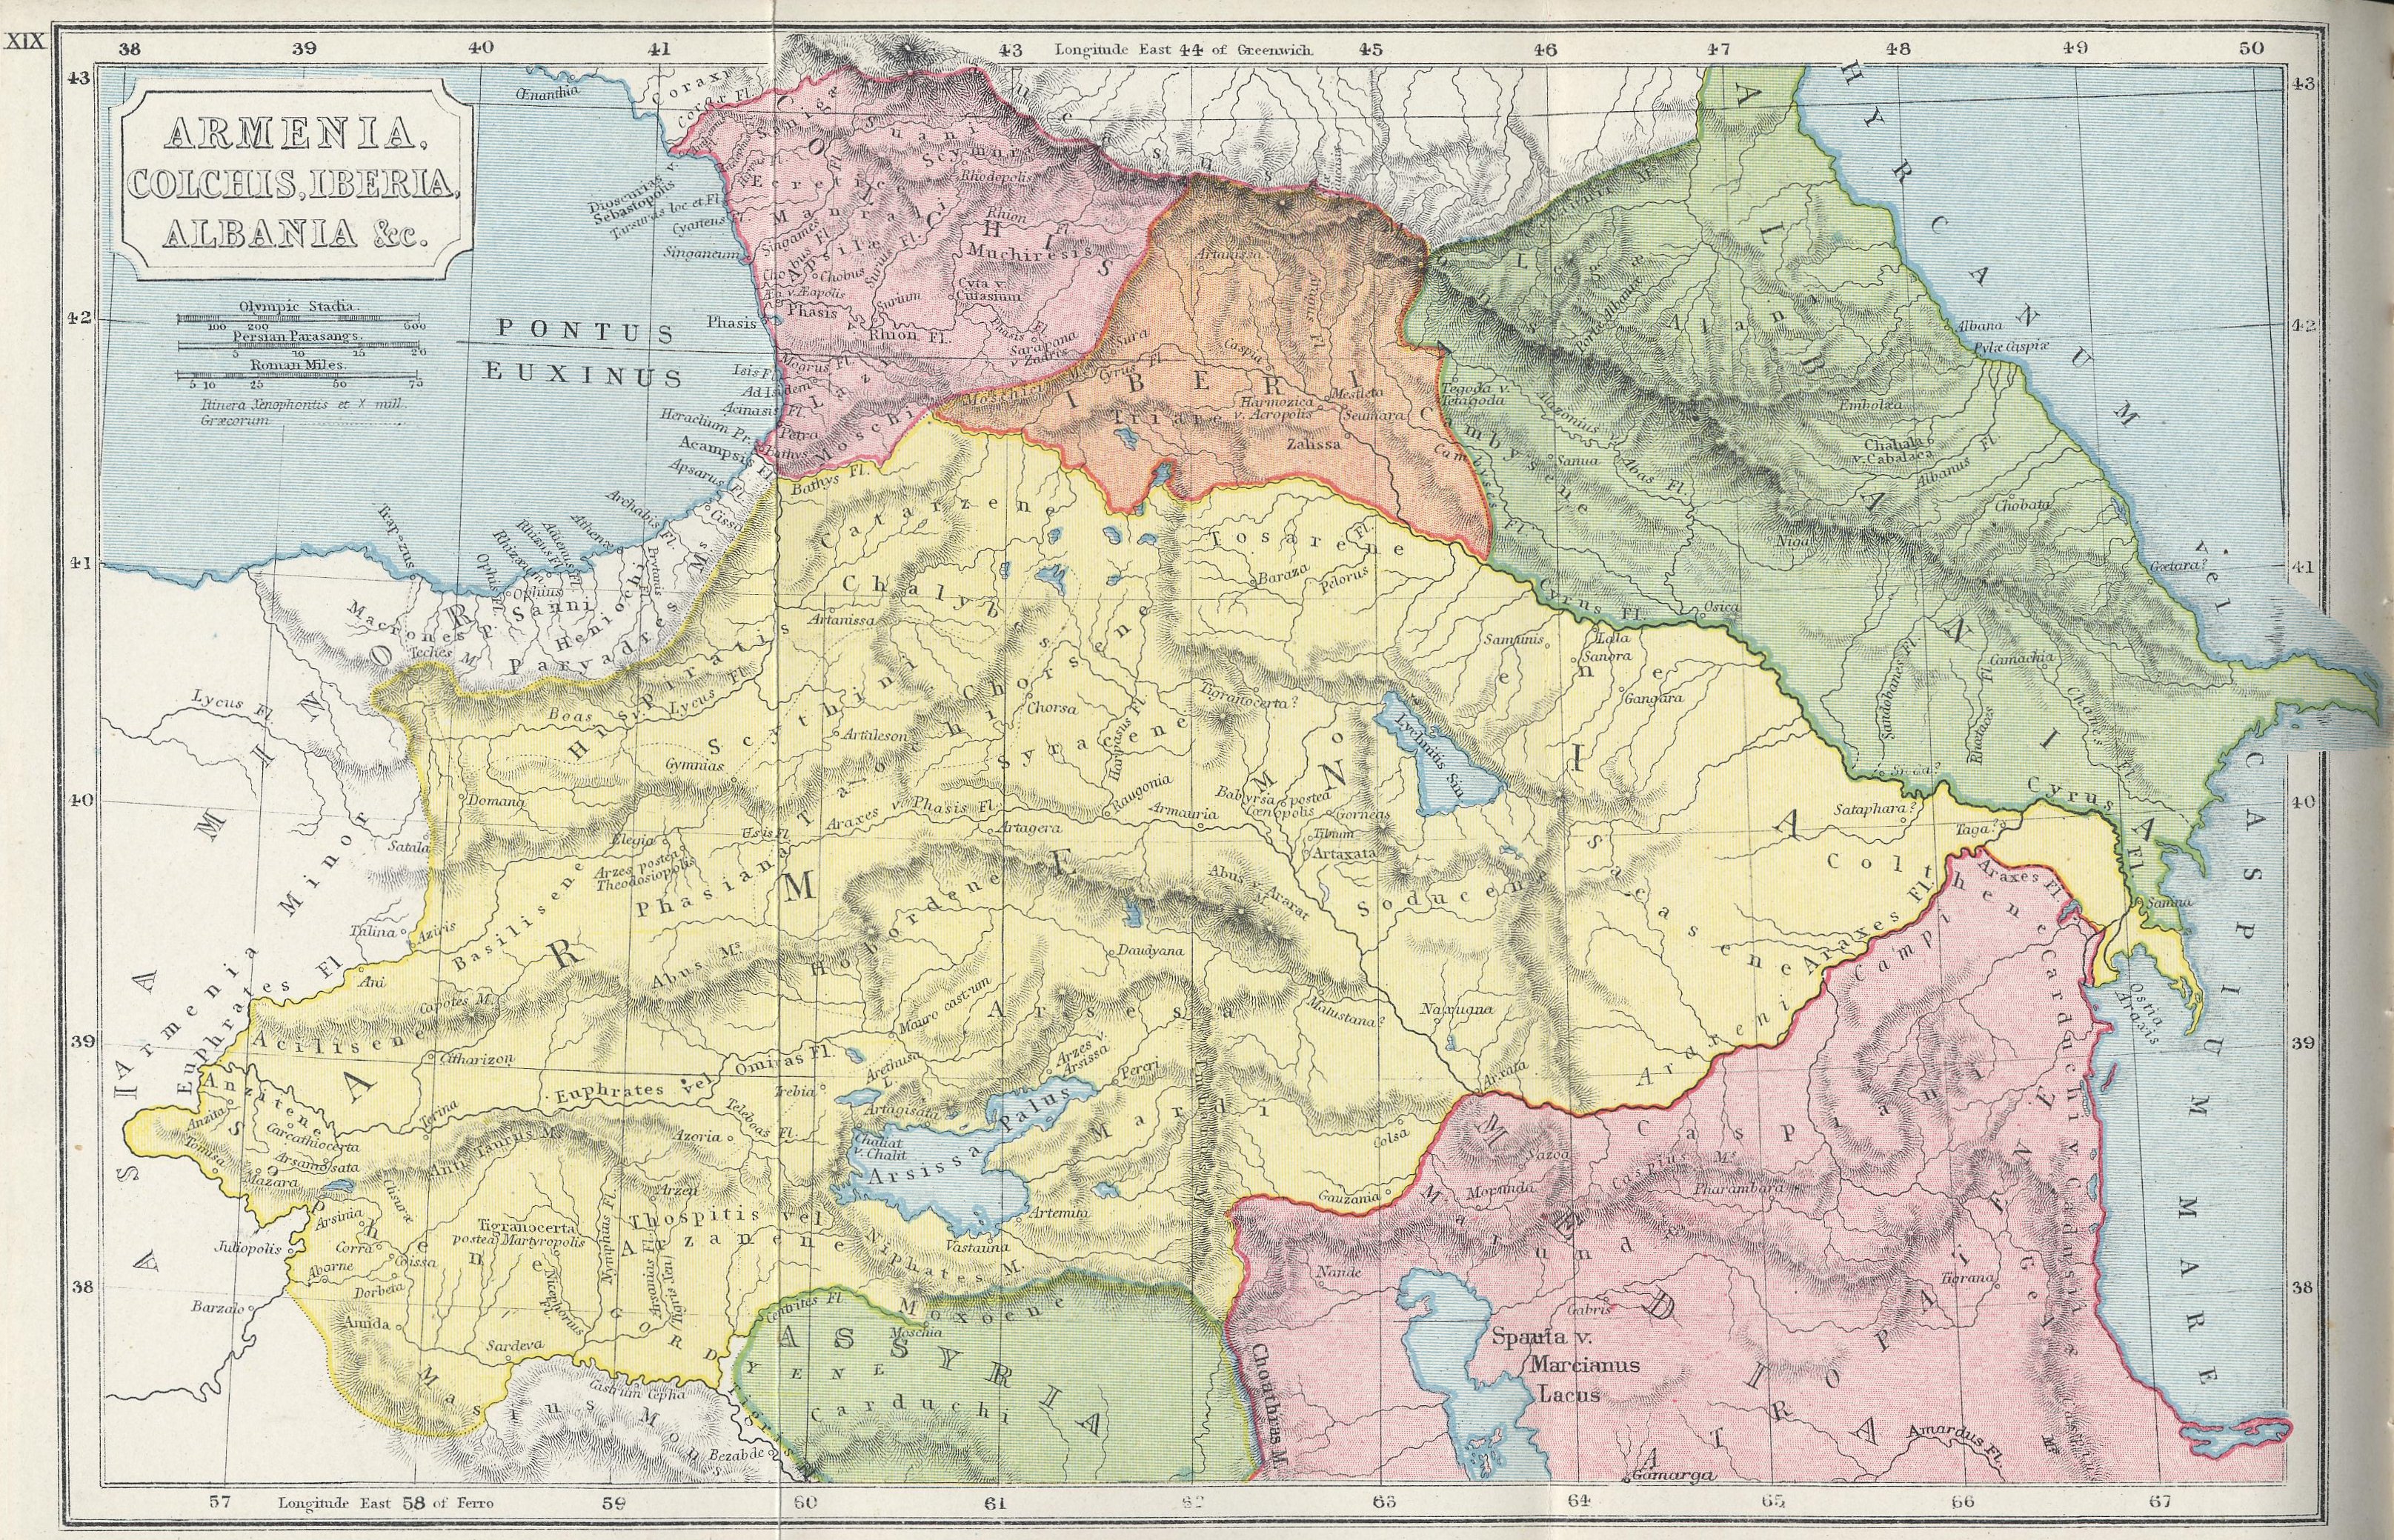 Map of Armenia 70 BC - AD 180